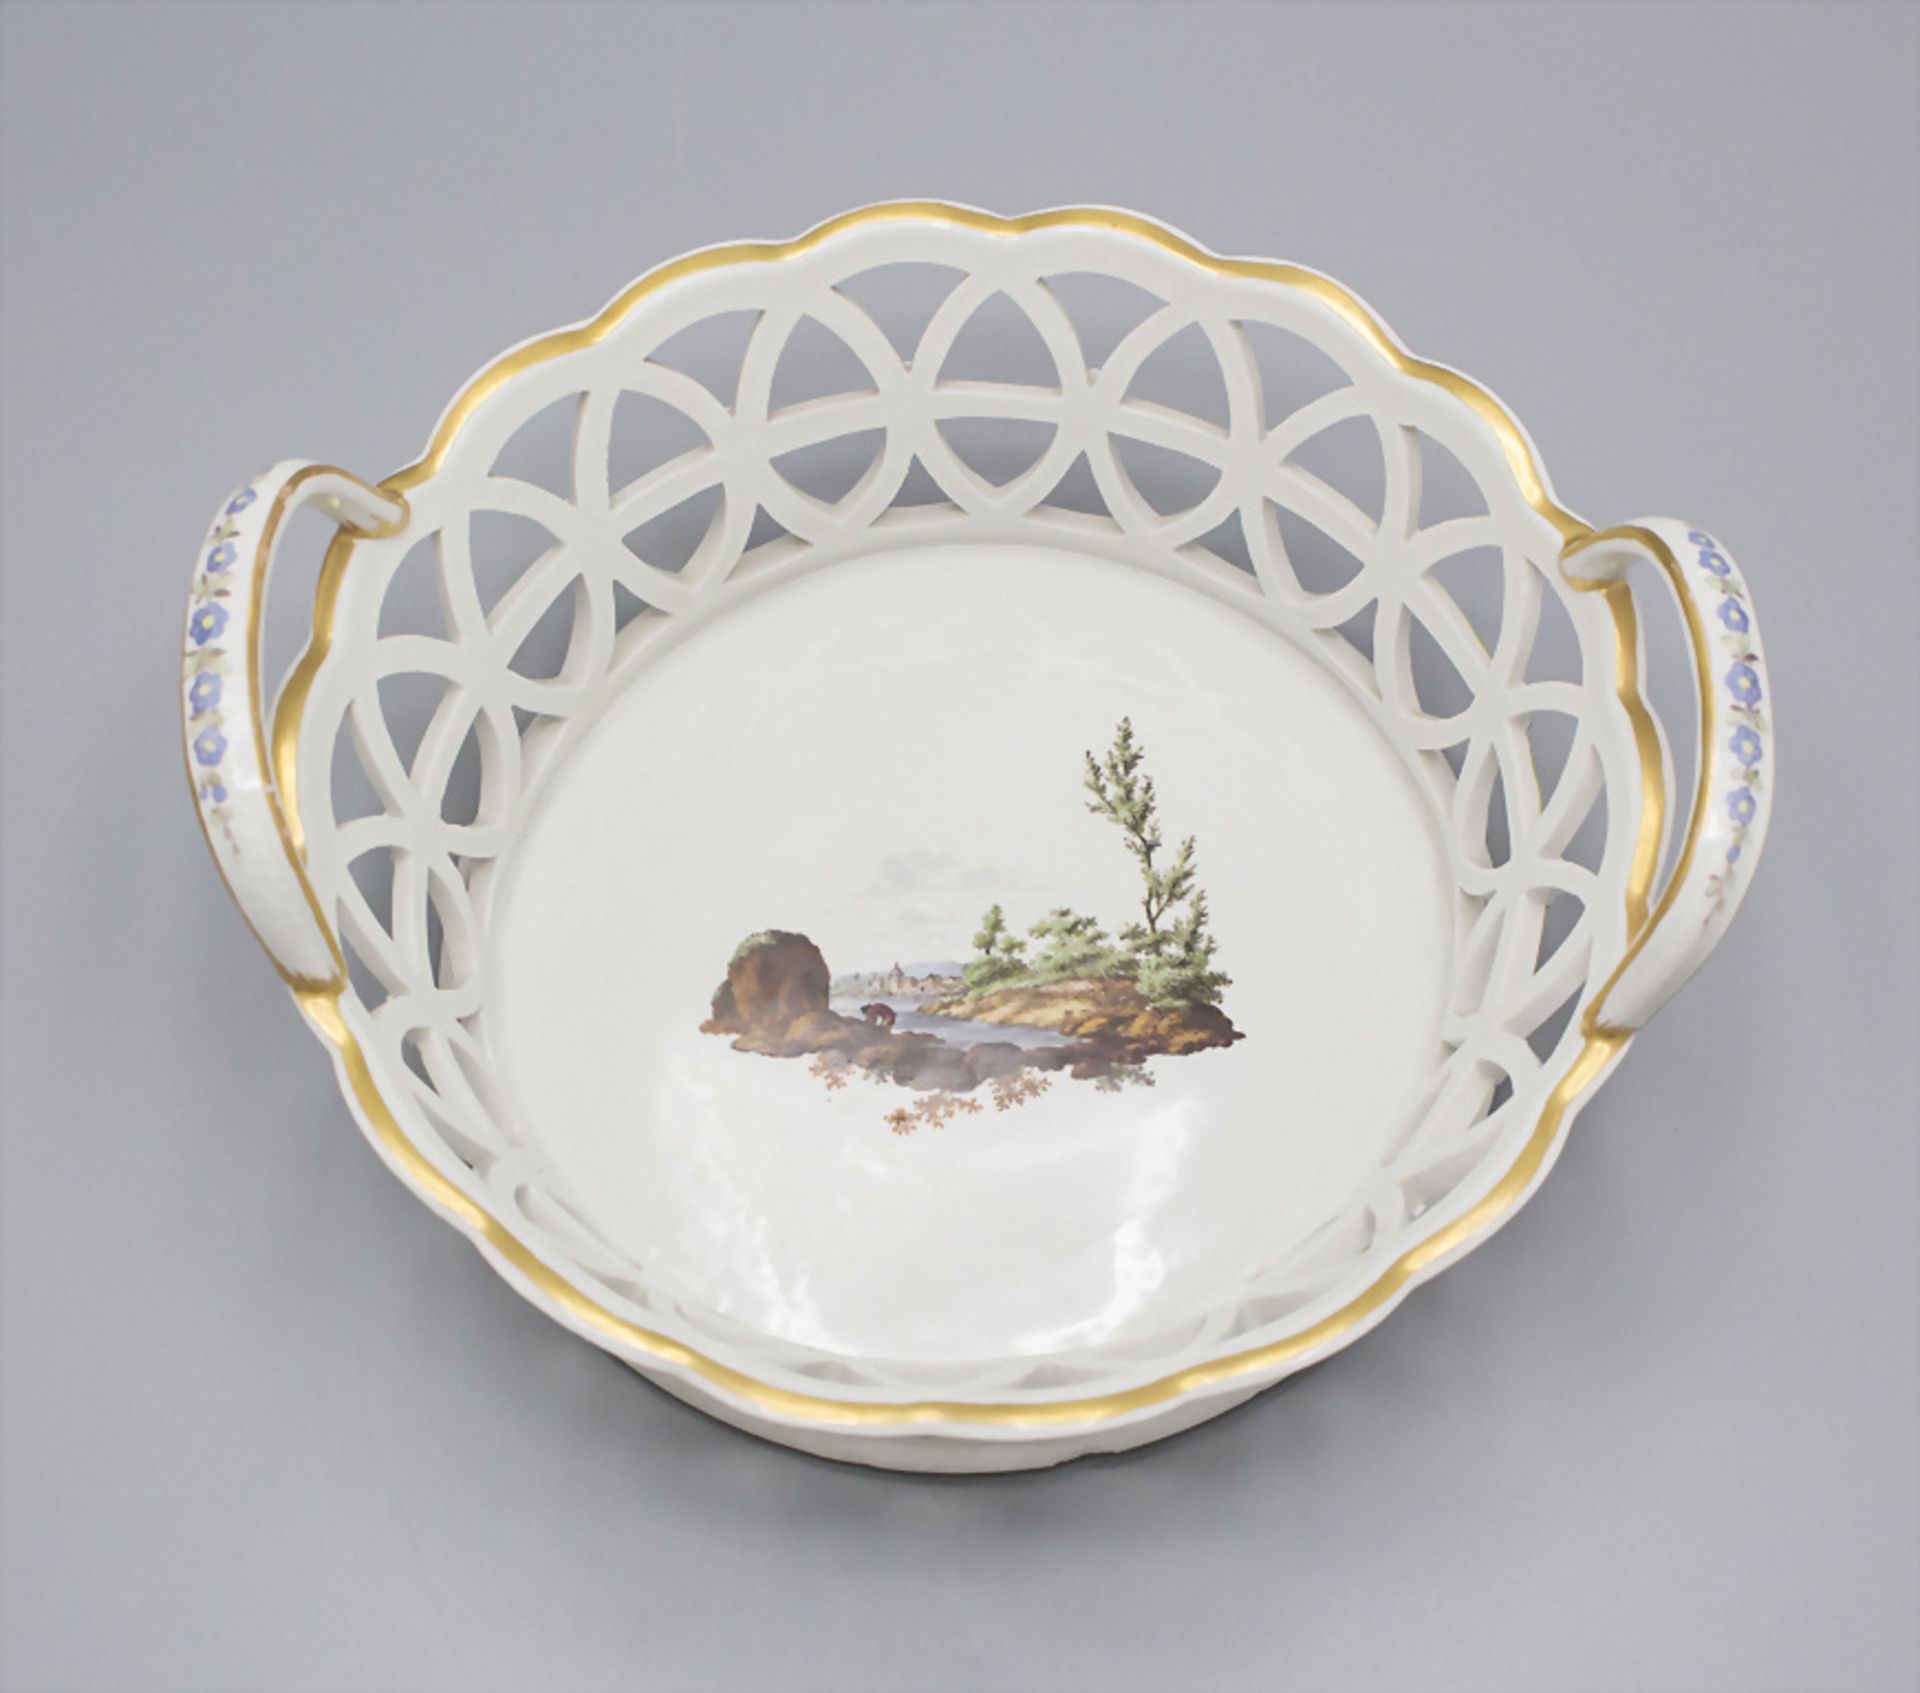 Porzellankorb / A porcelain basket, Fürstenberg, 18. Jh.